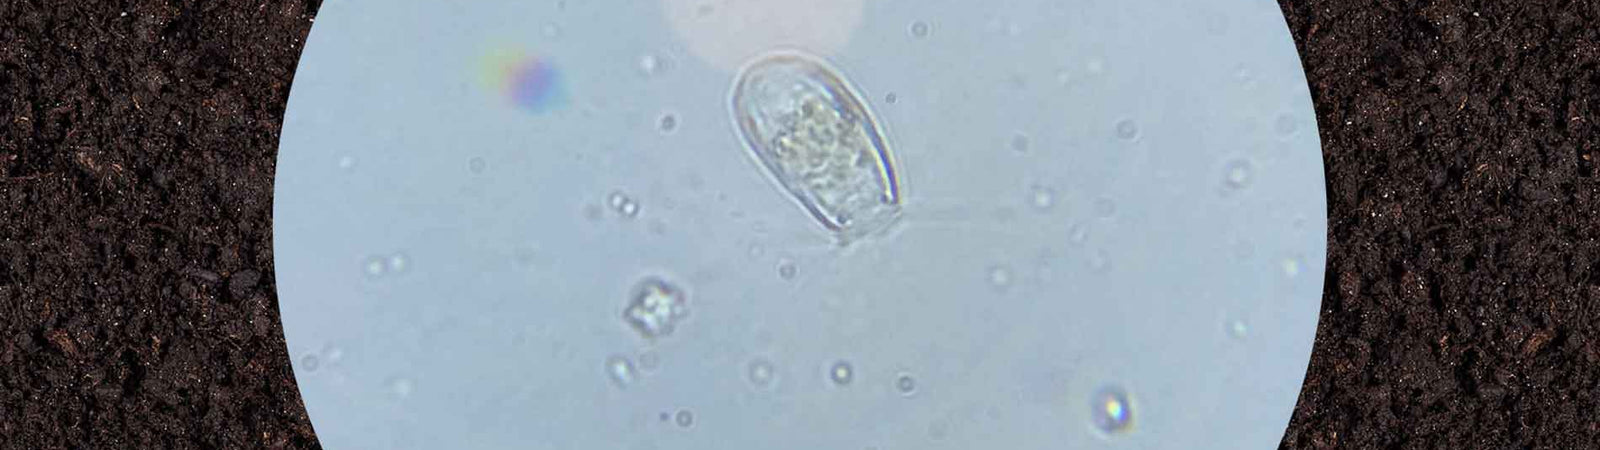 beneficial protozoa